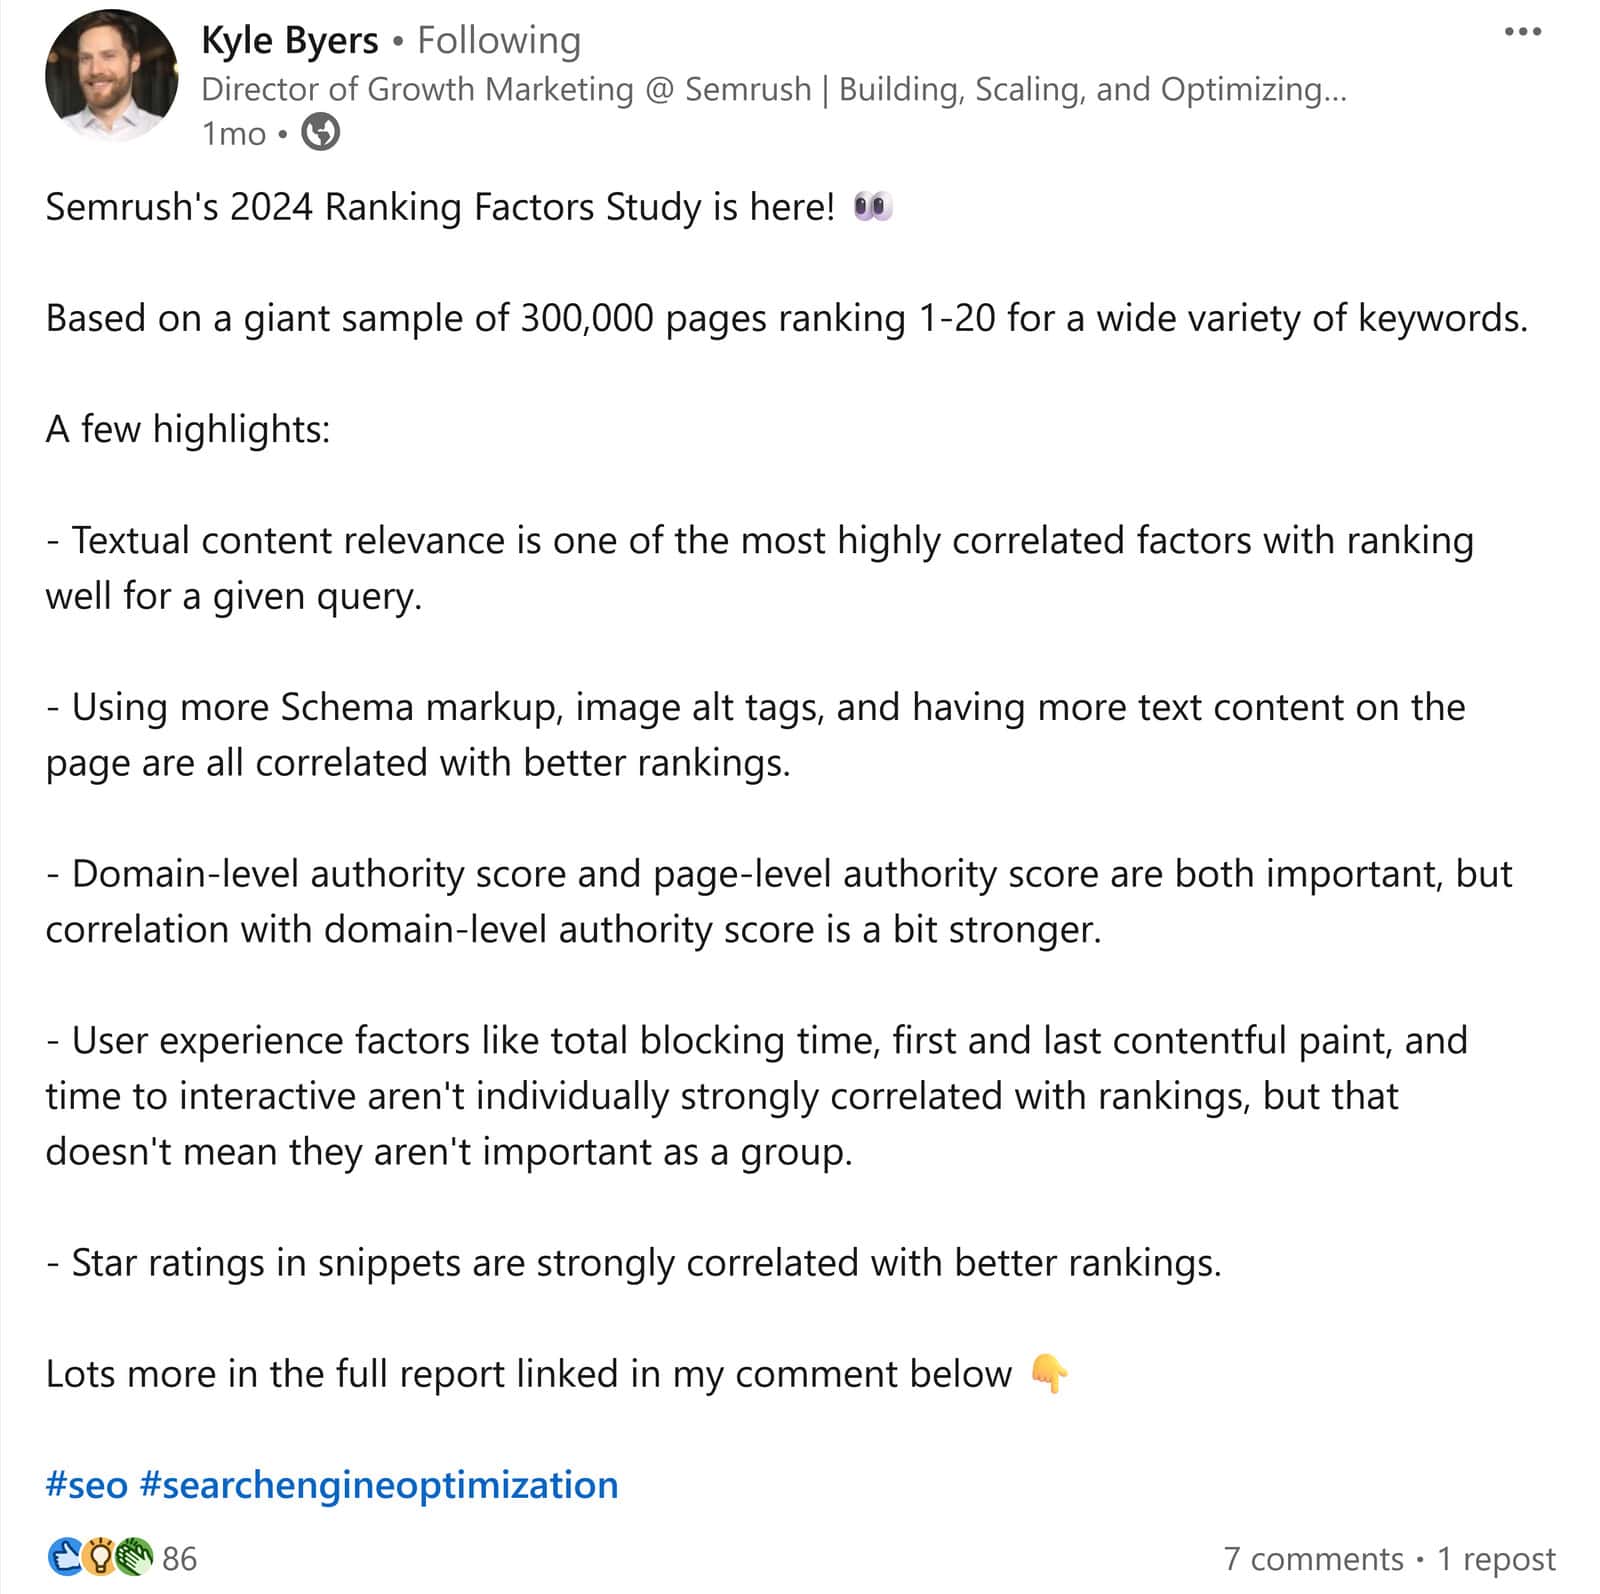 Kyle Byers' station  connected  LinkedIn astir  Semrush's 2024 Rankings Factors Study